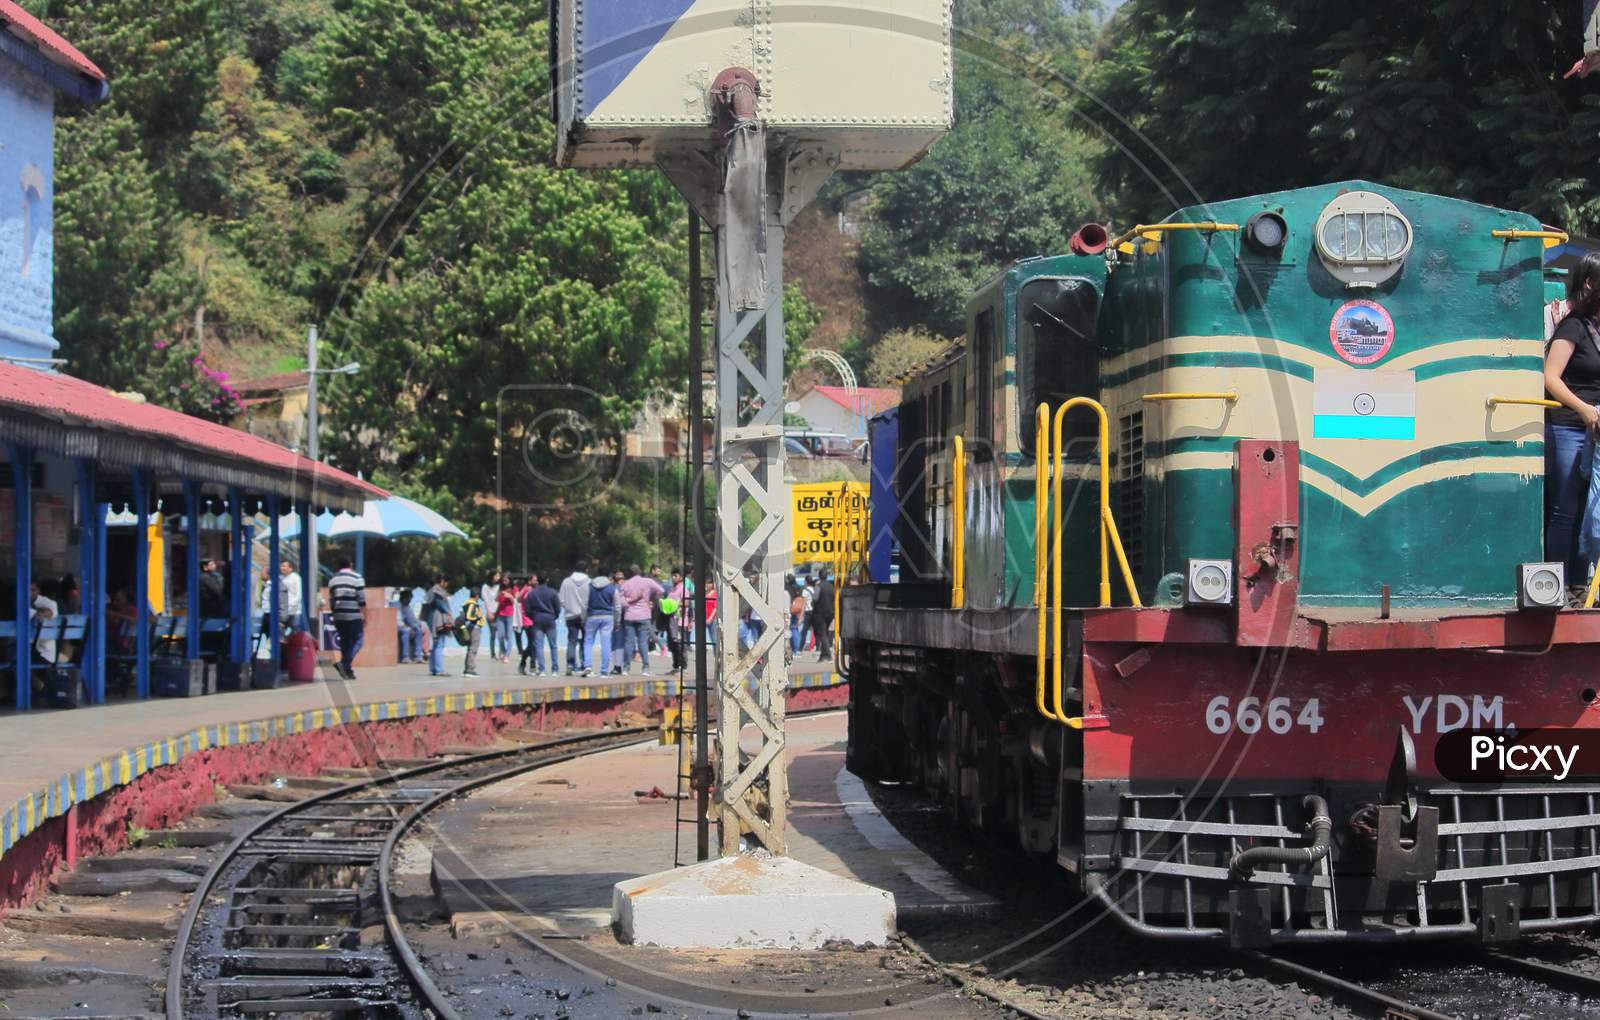 unesco world heritage nilgiri mountain rail (ooty toy train) at coonoor railway station, near ooty in tamilnadu, south india